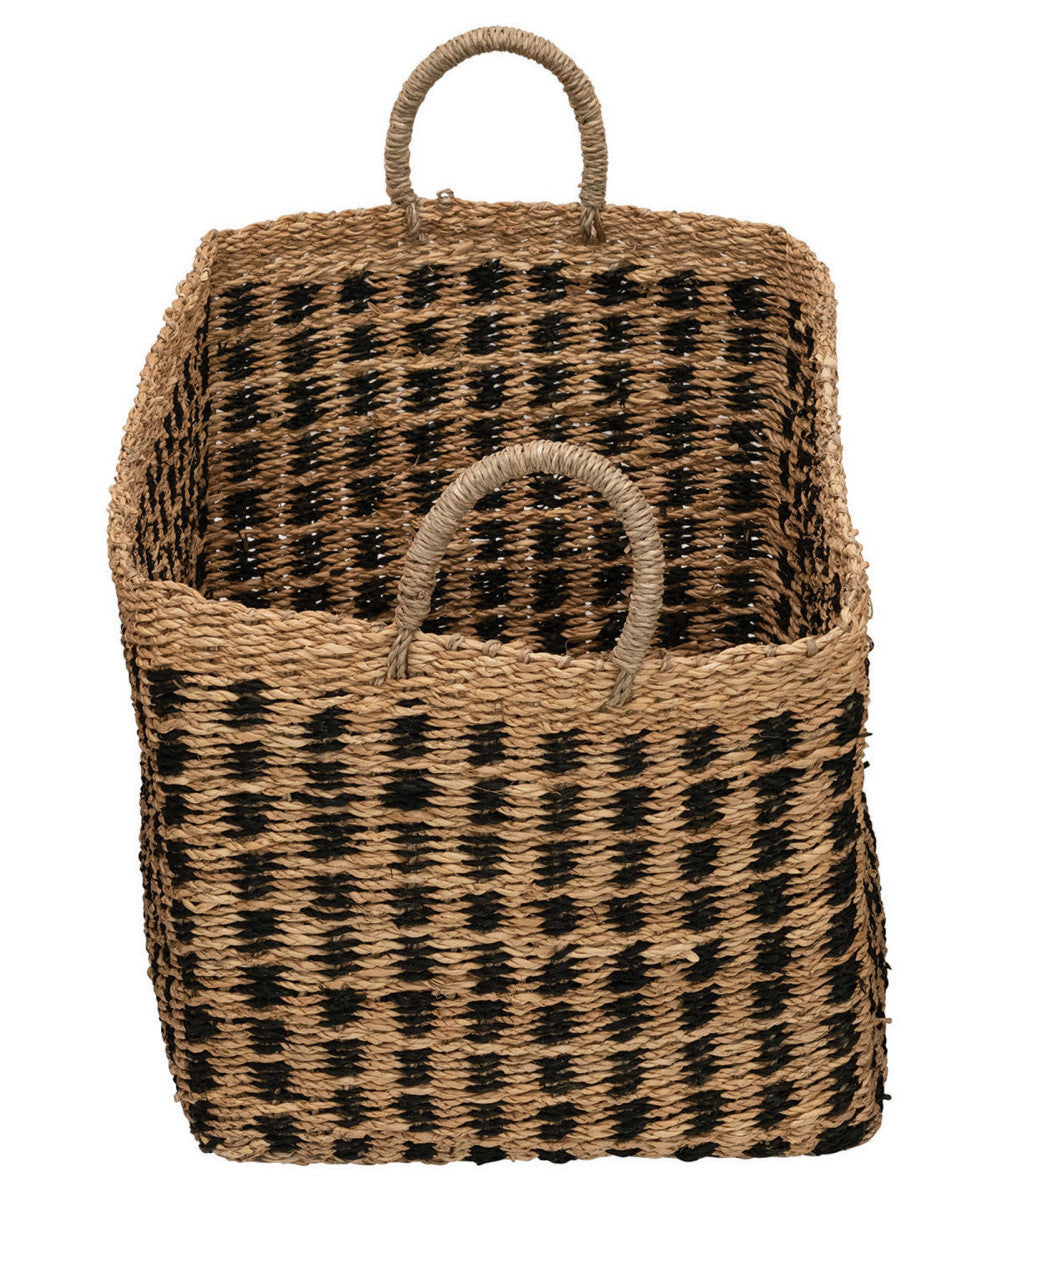 Hand-Woven Seagrass Basket w/ Handles - 19 3/4"